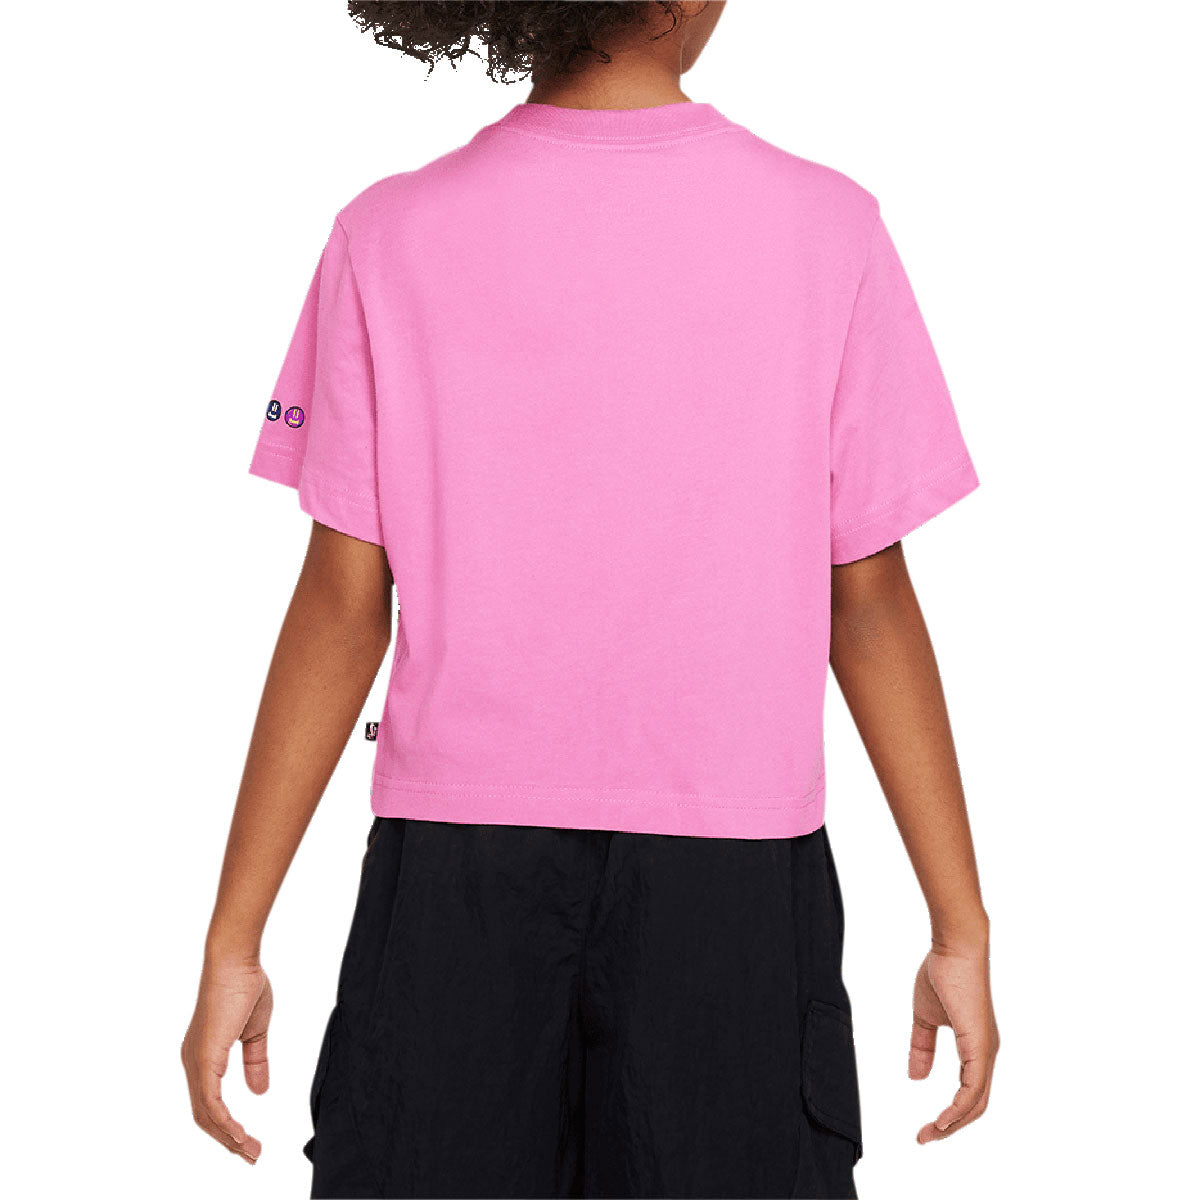 Nike SB Womens x Rayssa Leal T-Shirt - Pinkfire II image 3